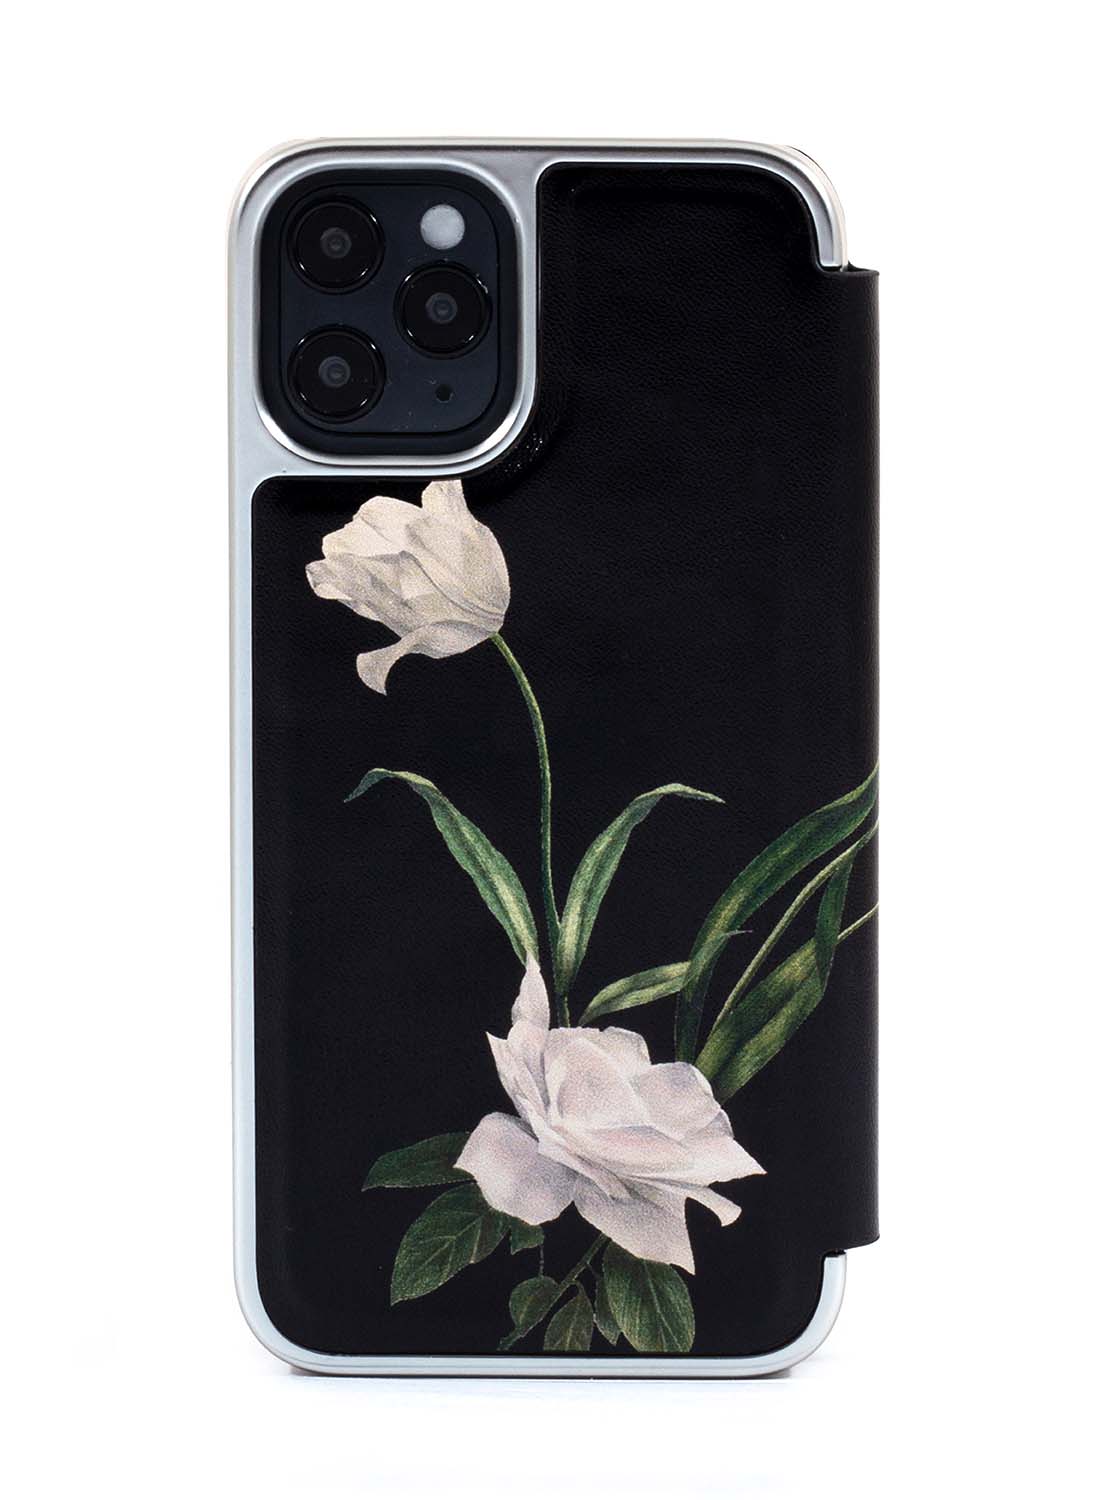 Ted Baker iPhone 12 Mini Mirror Folio Case - Elegant Book Case w/ Built-in Mirror, Wireless Charging Compatible, Women/Girls Phone Case - Elder Flower Black Silver